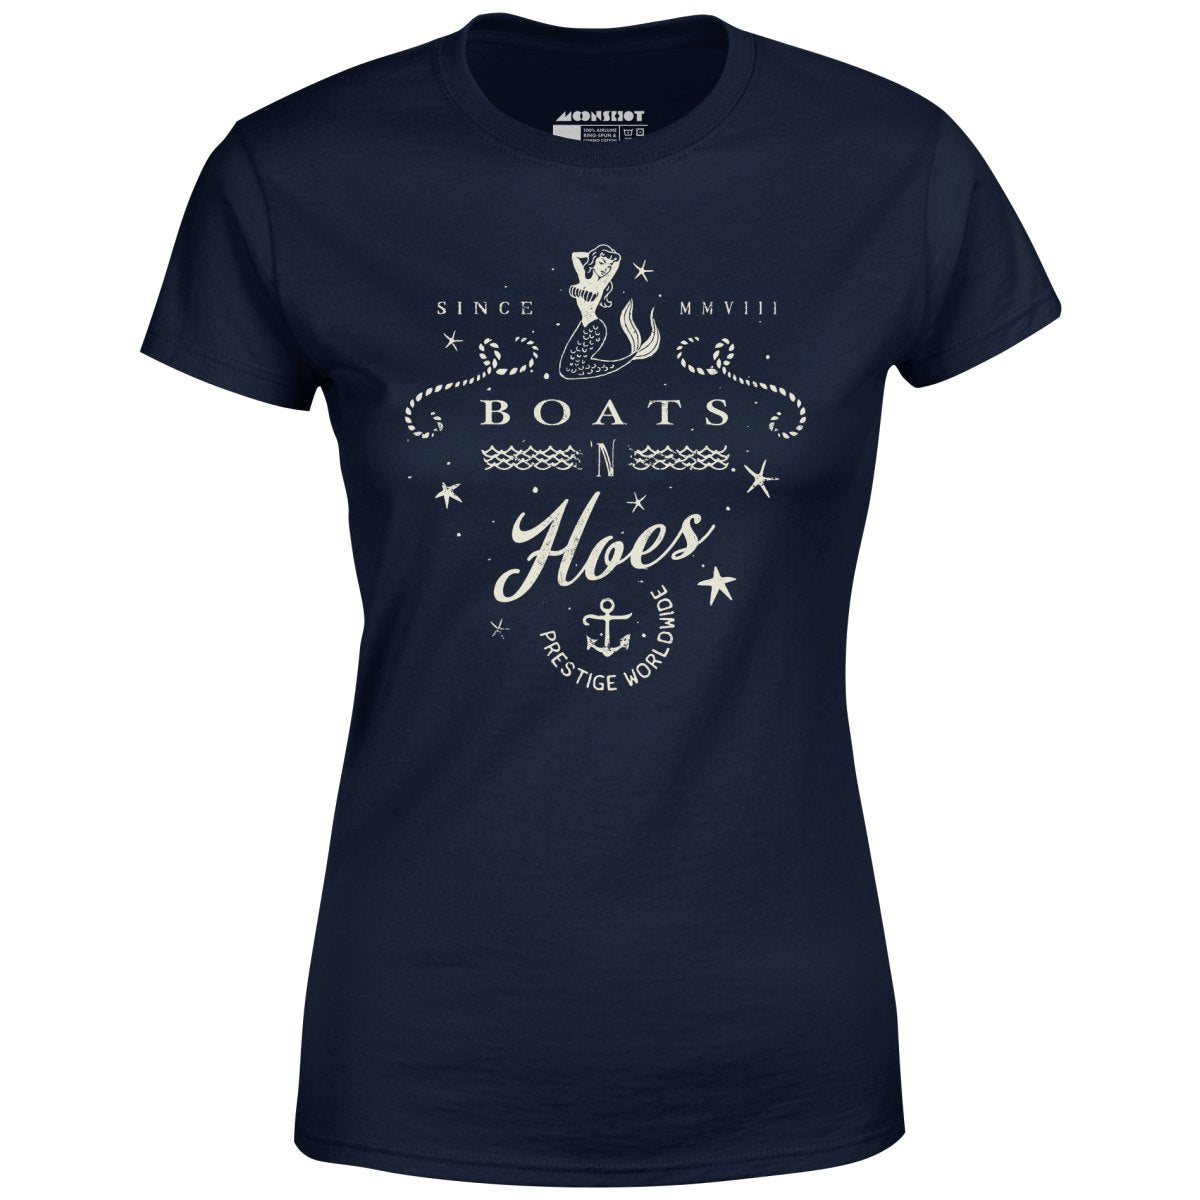 Boats n Hoes - Women's T-Shirt